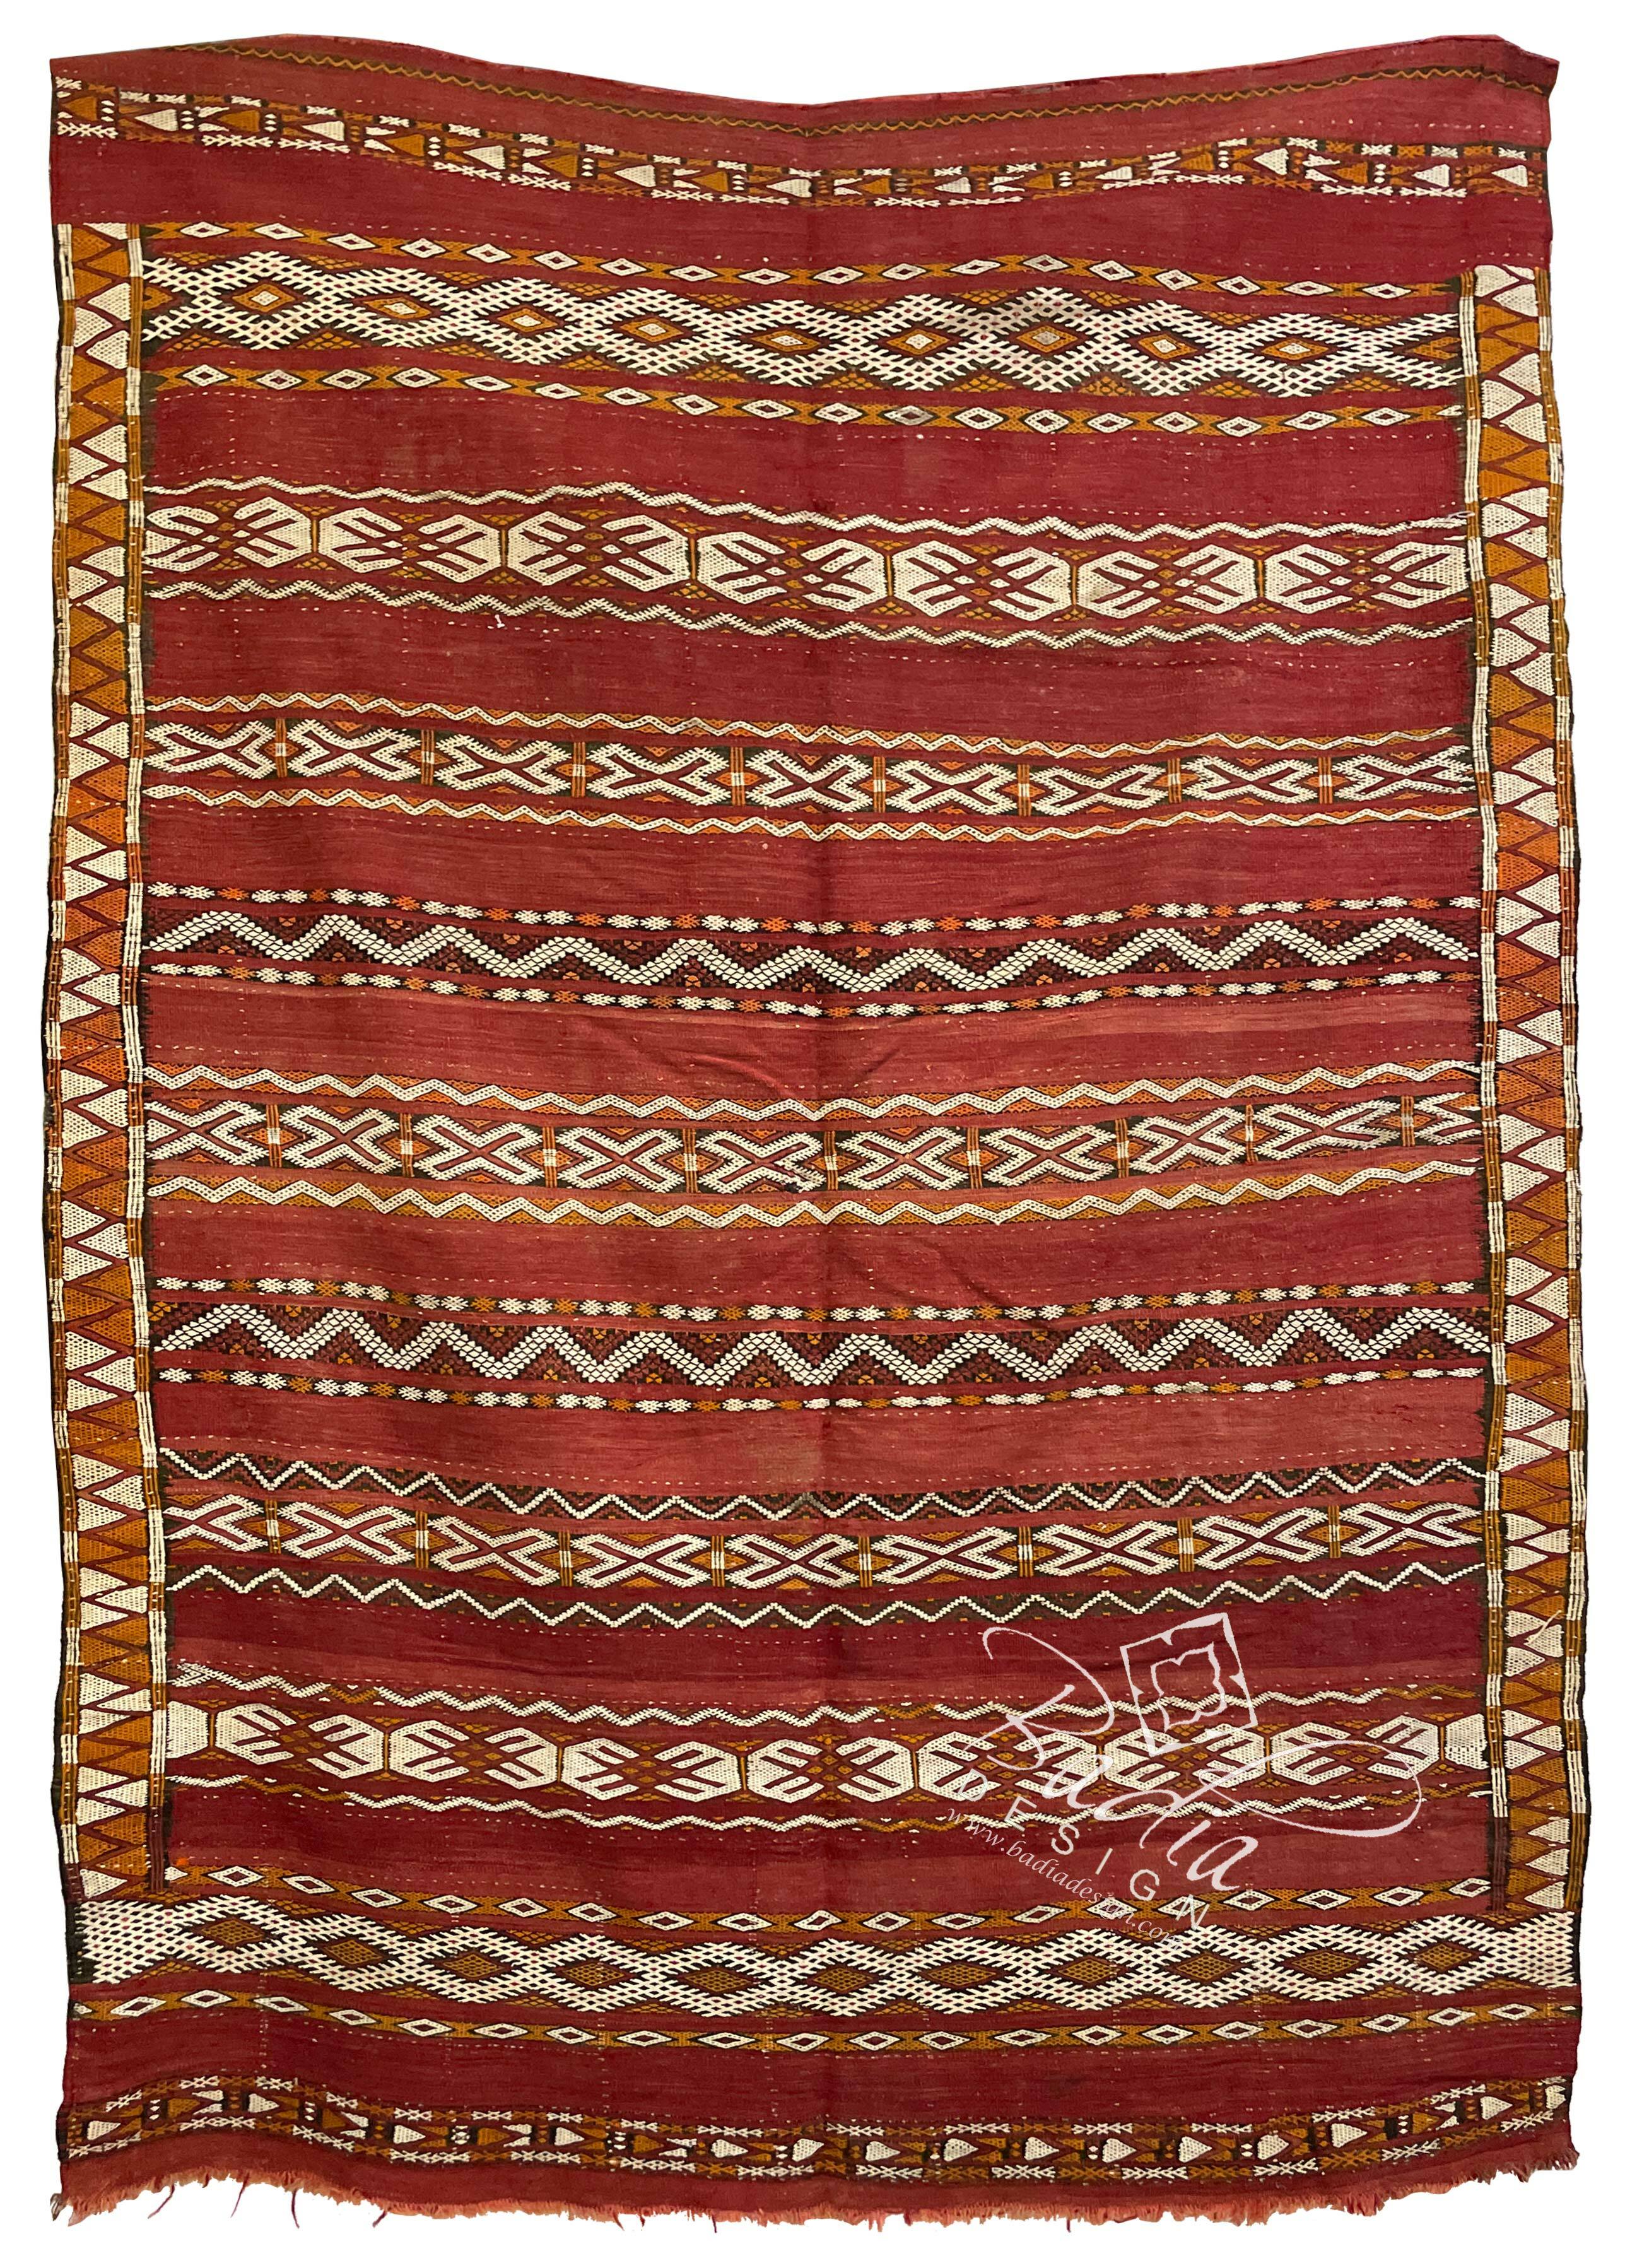 affordable-moroccan-kilim-rugs-r0271.jpg